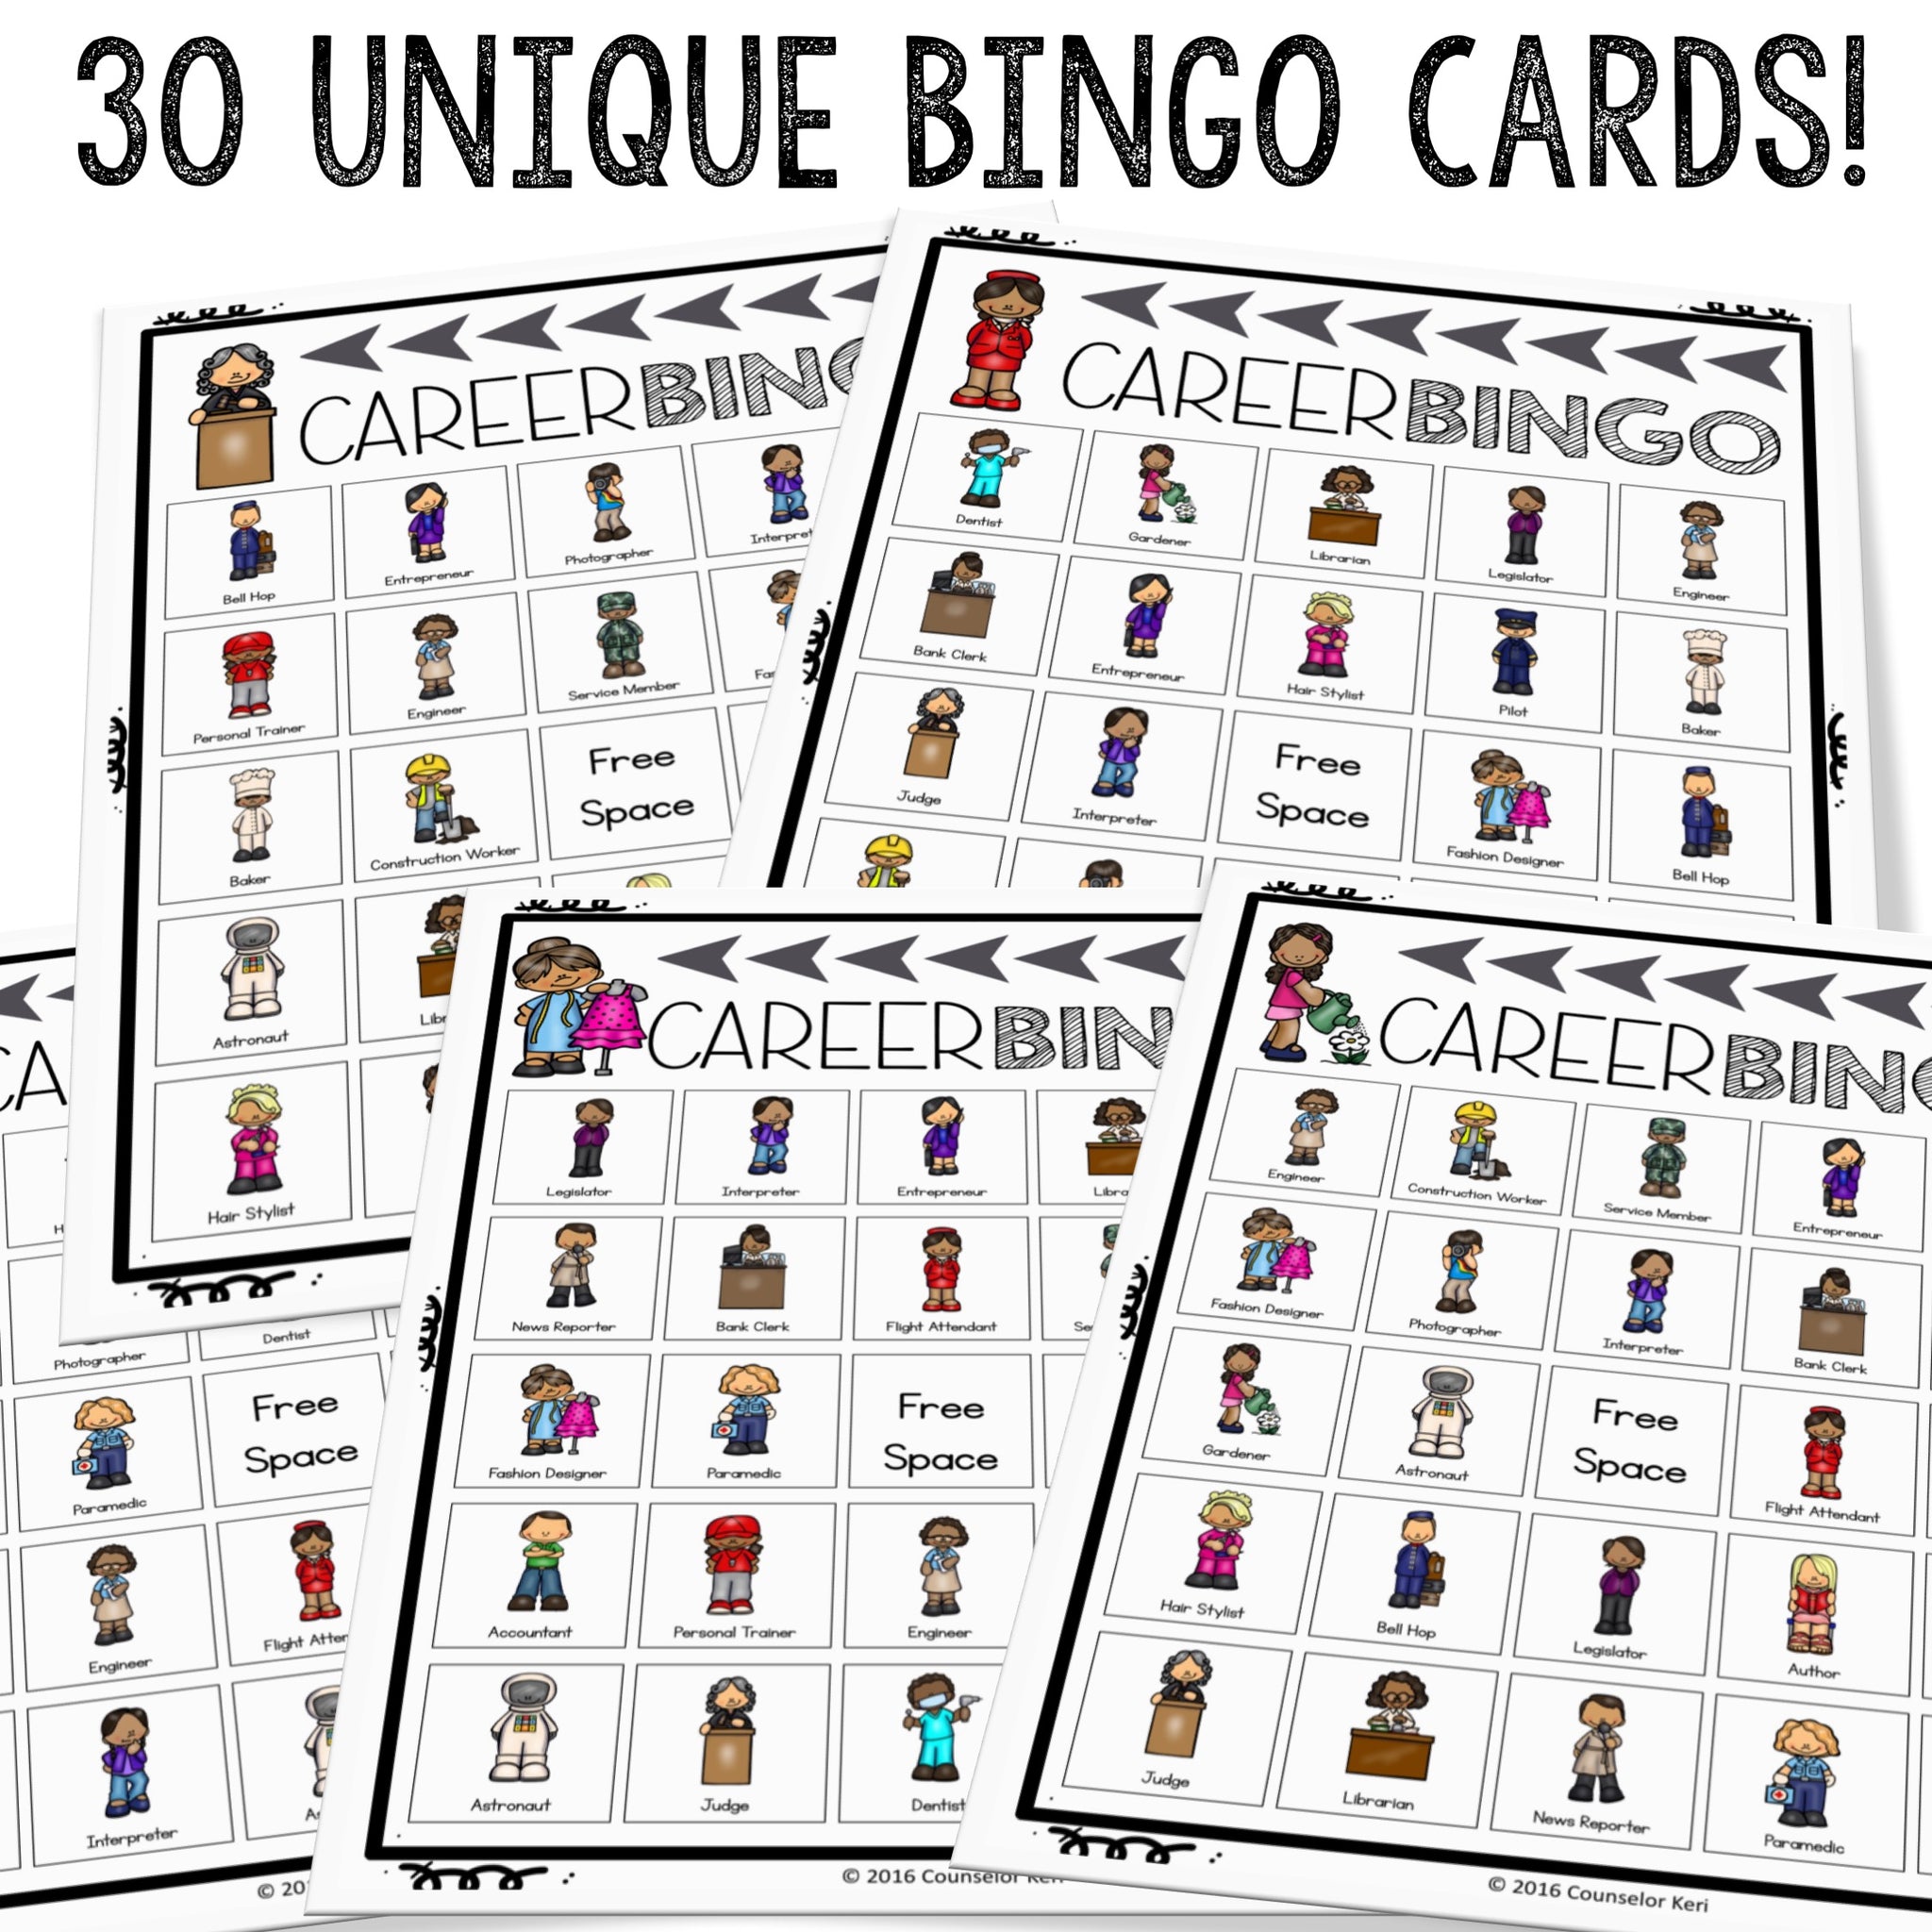 career-bingo-2-community-helper-game-for-elementary-career-education